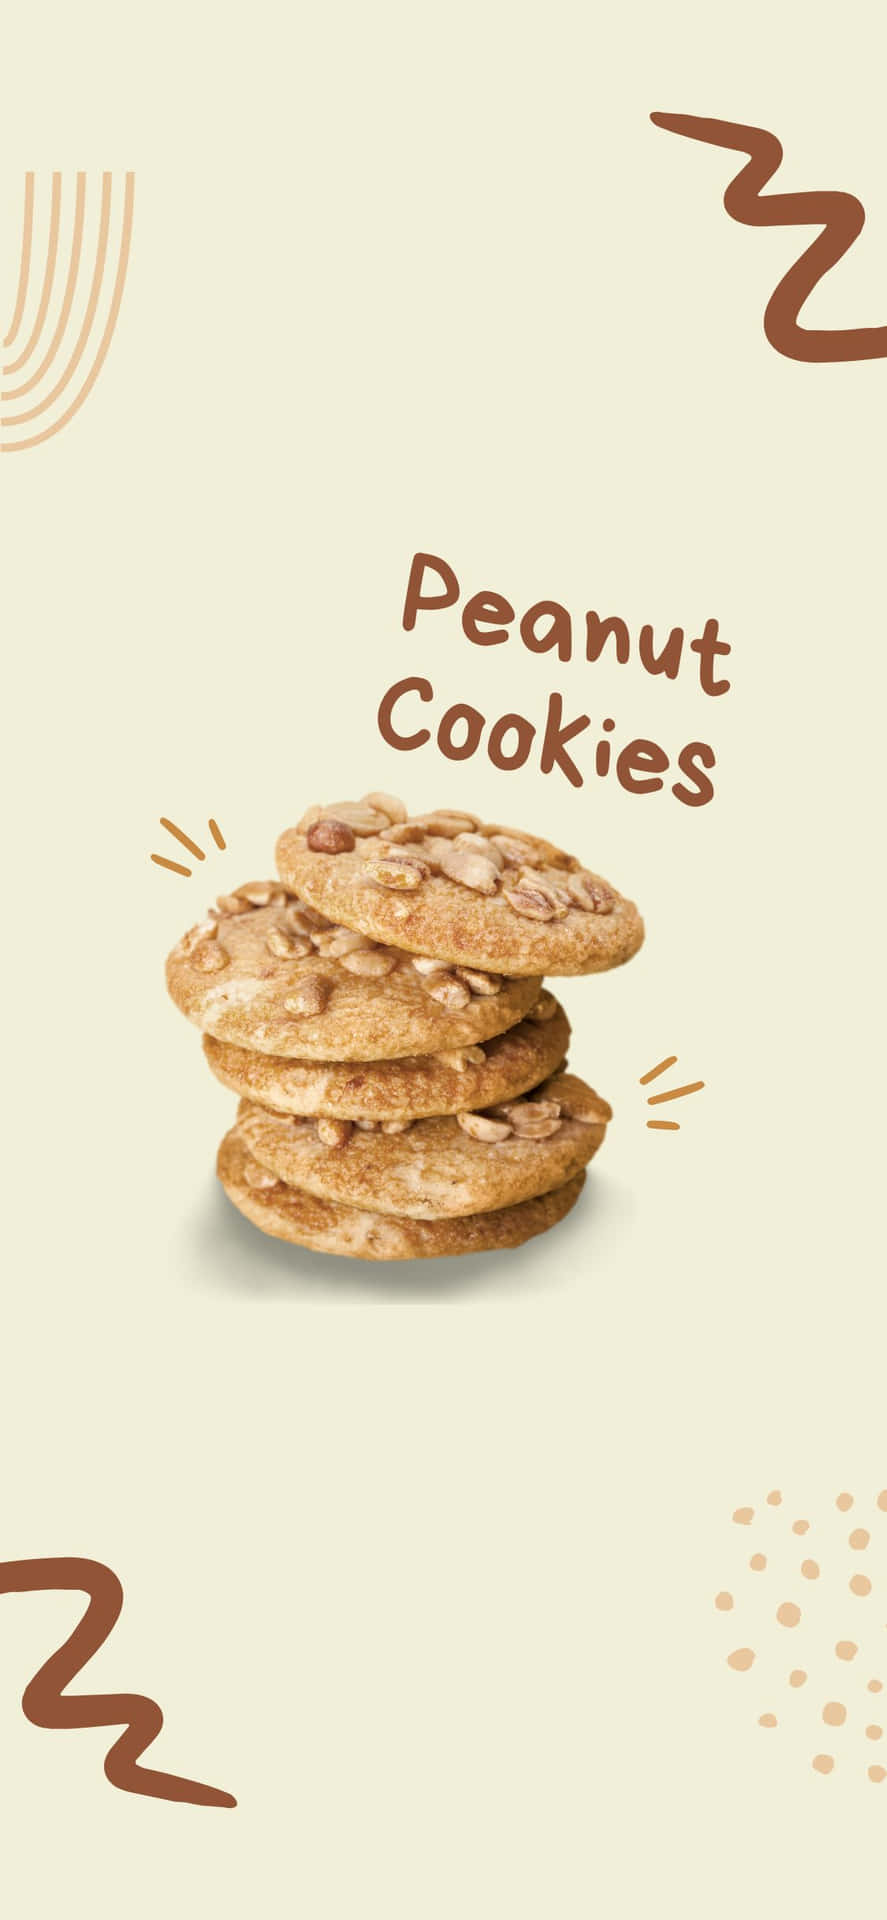 Peanut Cookies iPhone XS Pastries Background